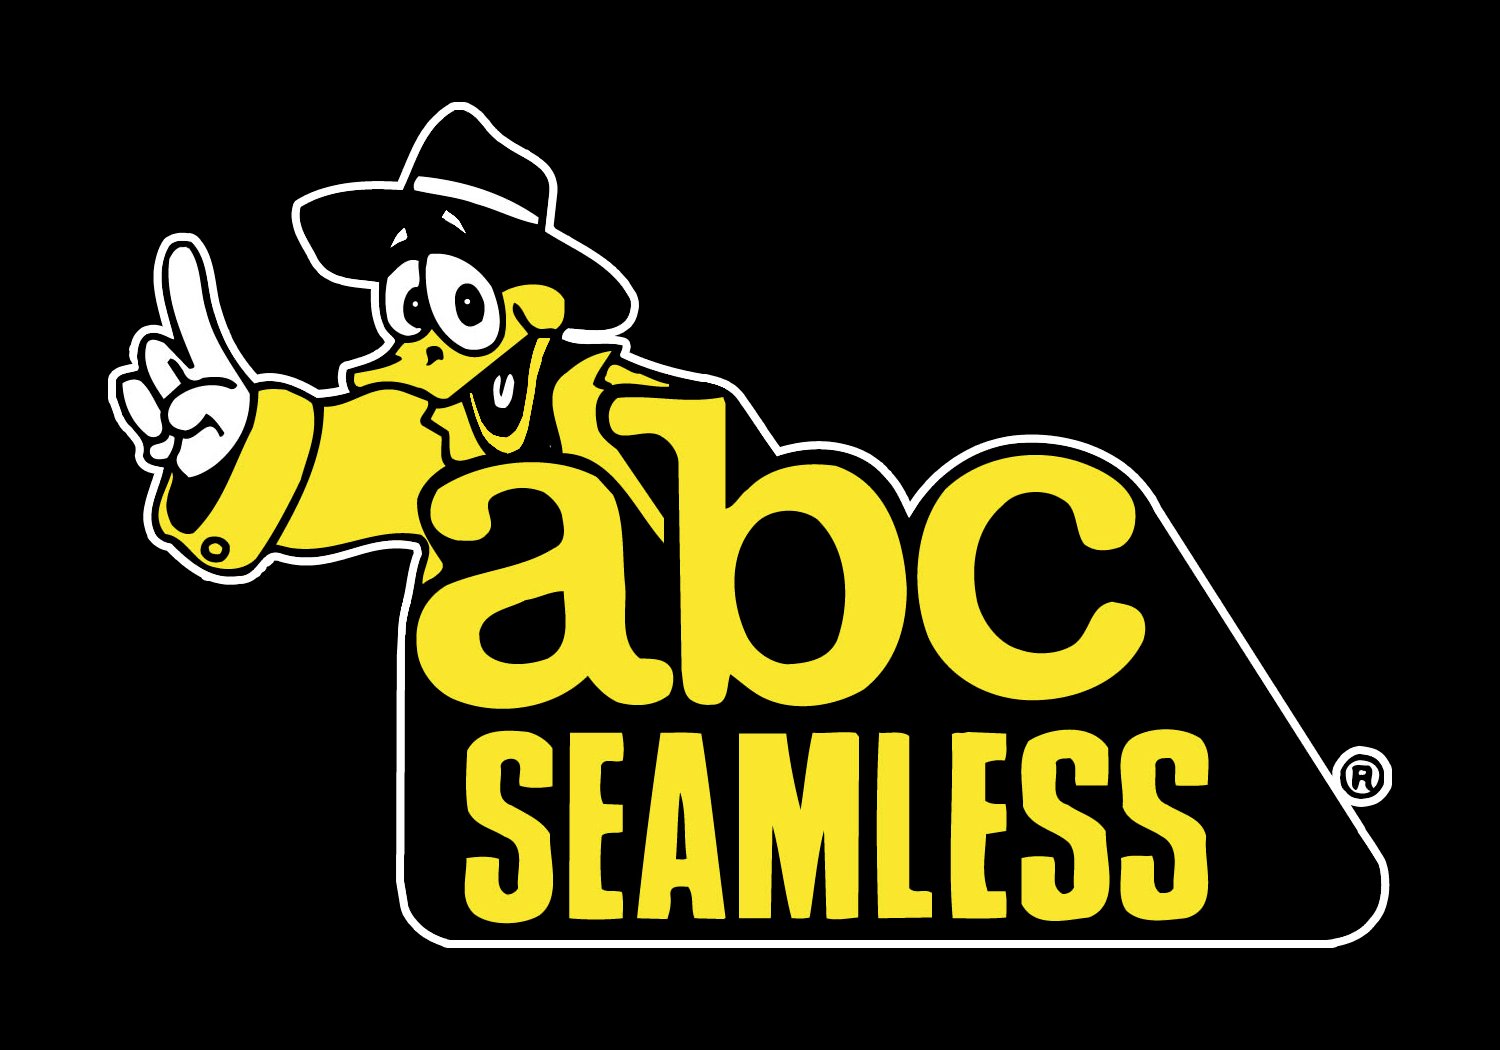 ABC Seamless of St. Cloud Logo